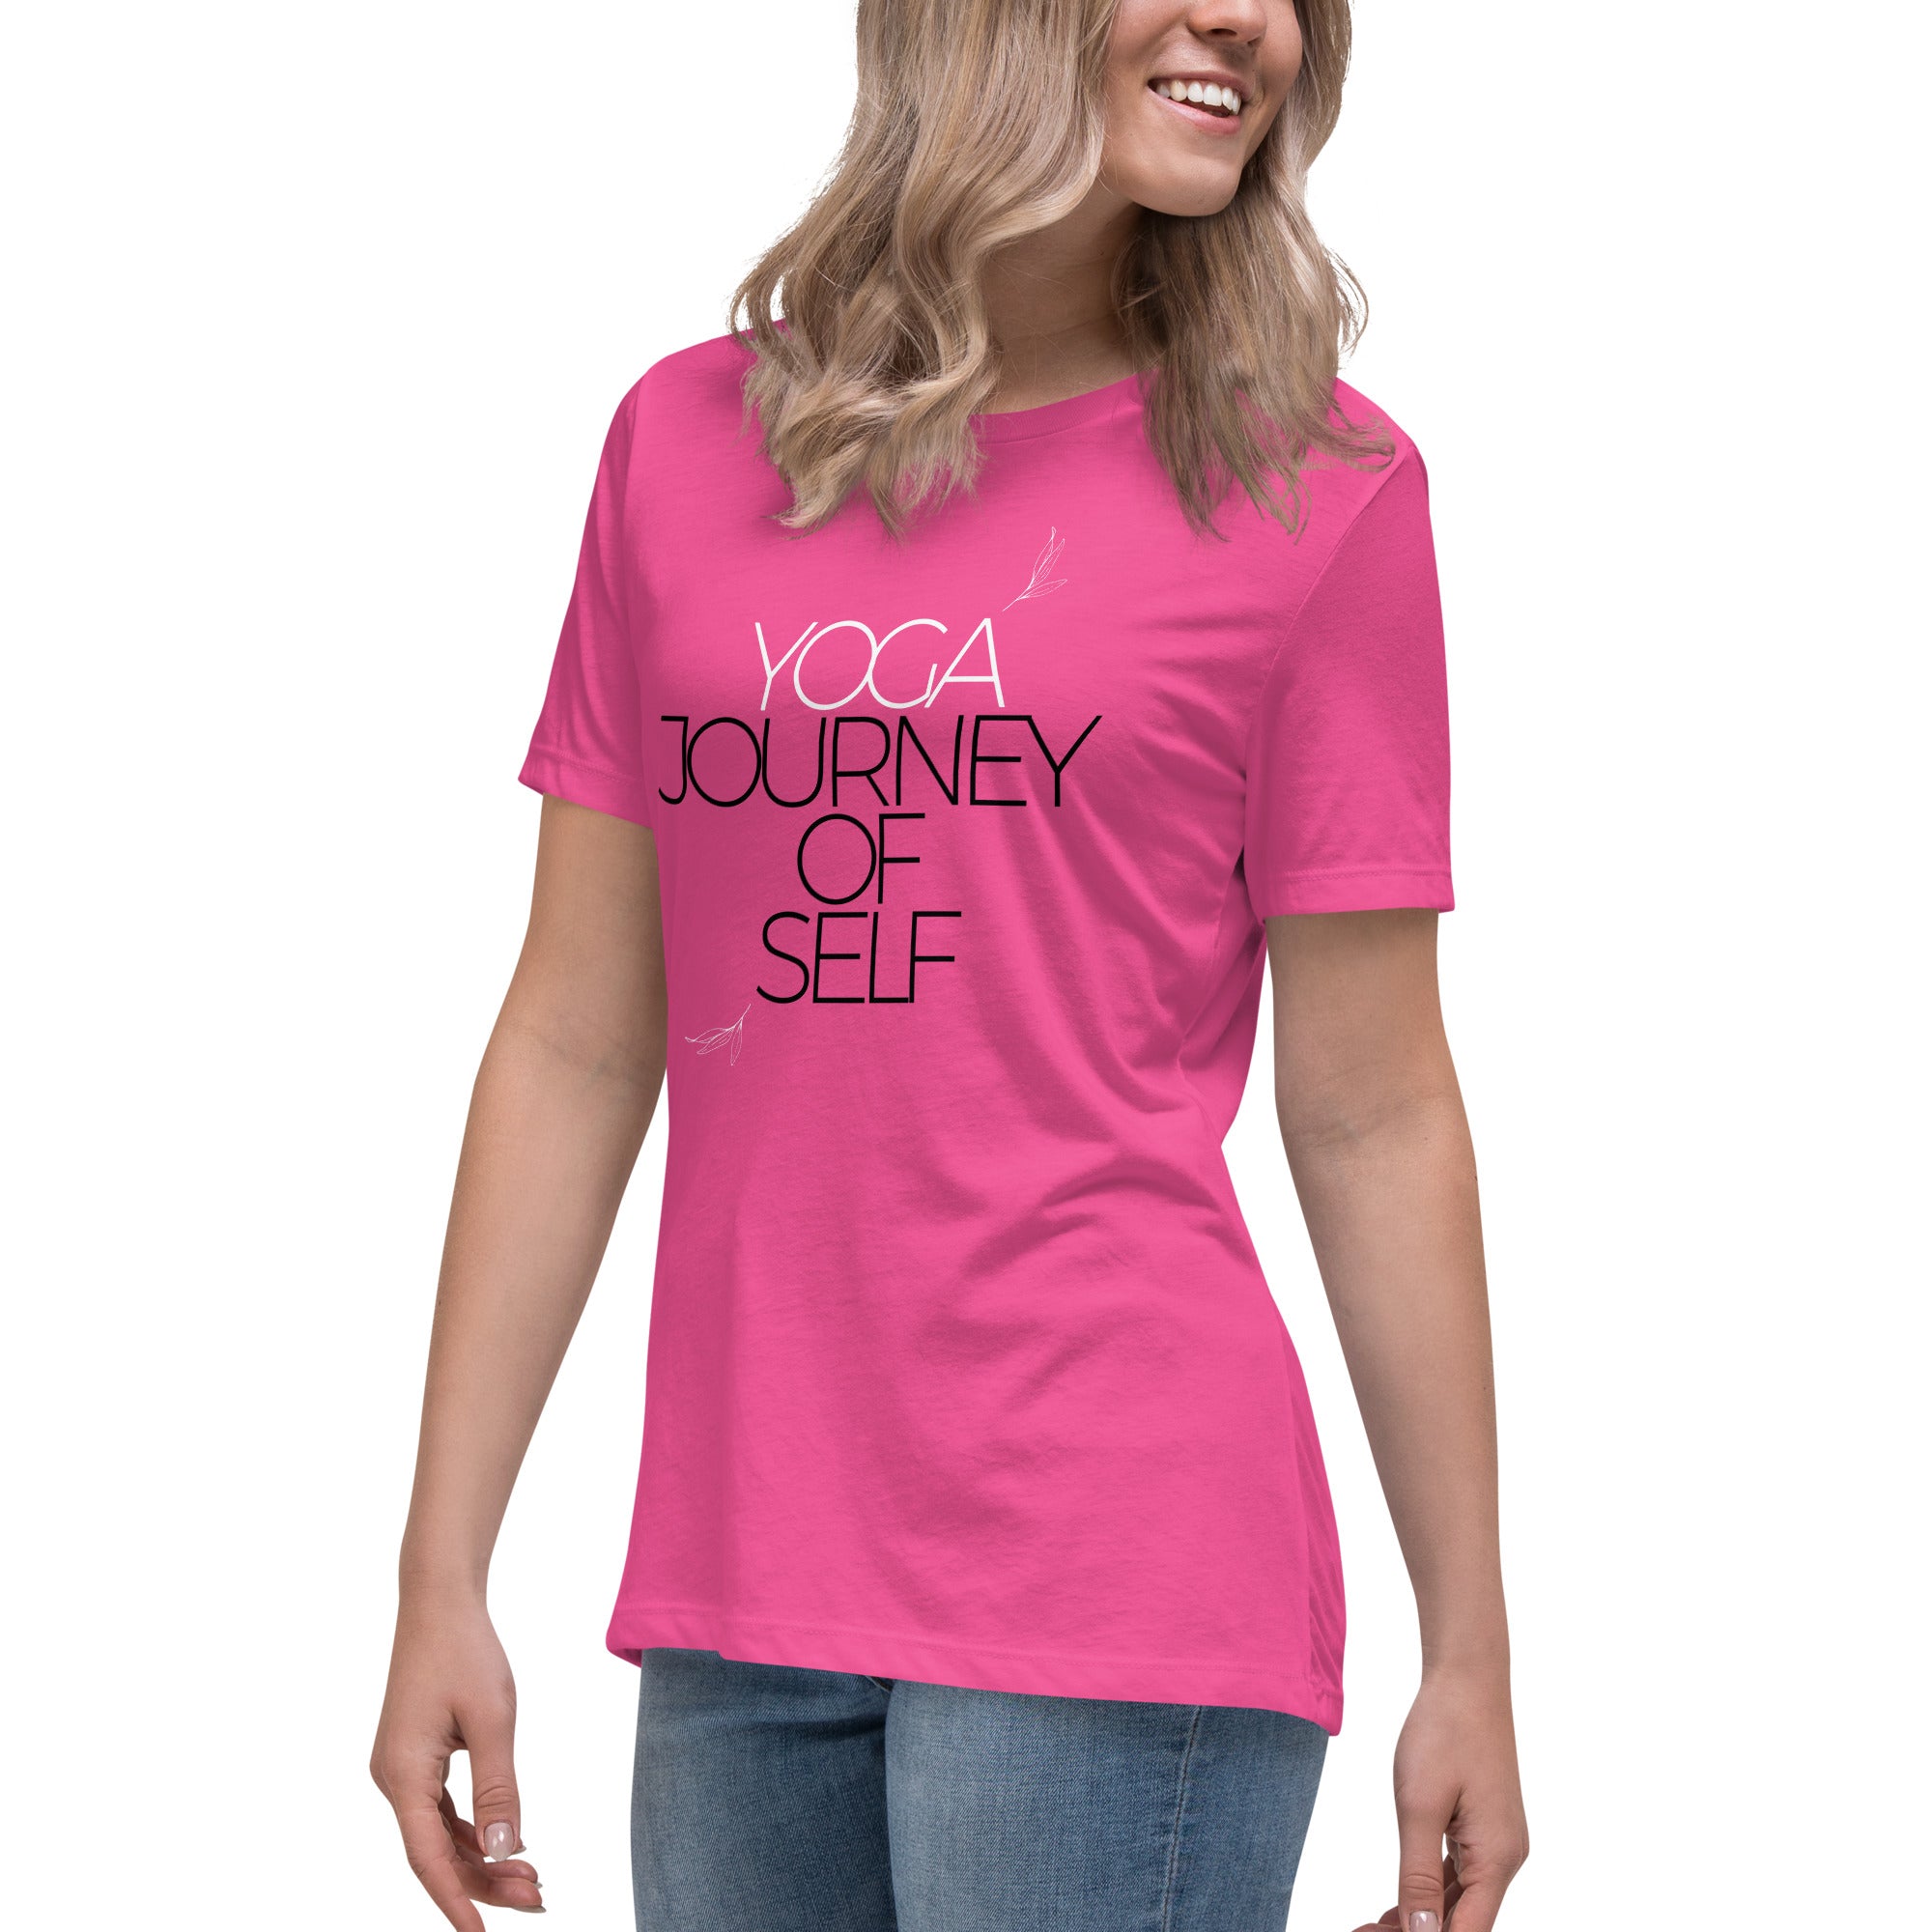 Yoga means Journey of Self Women's T-shirt Printful